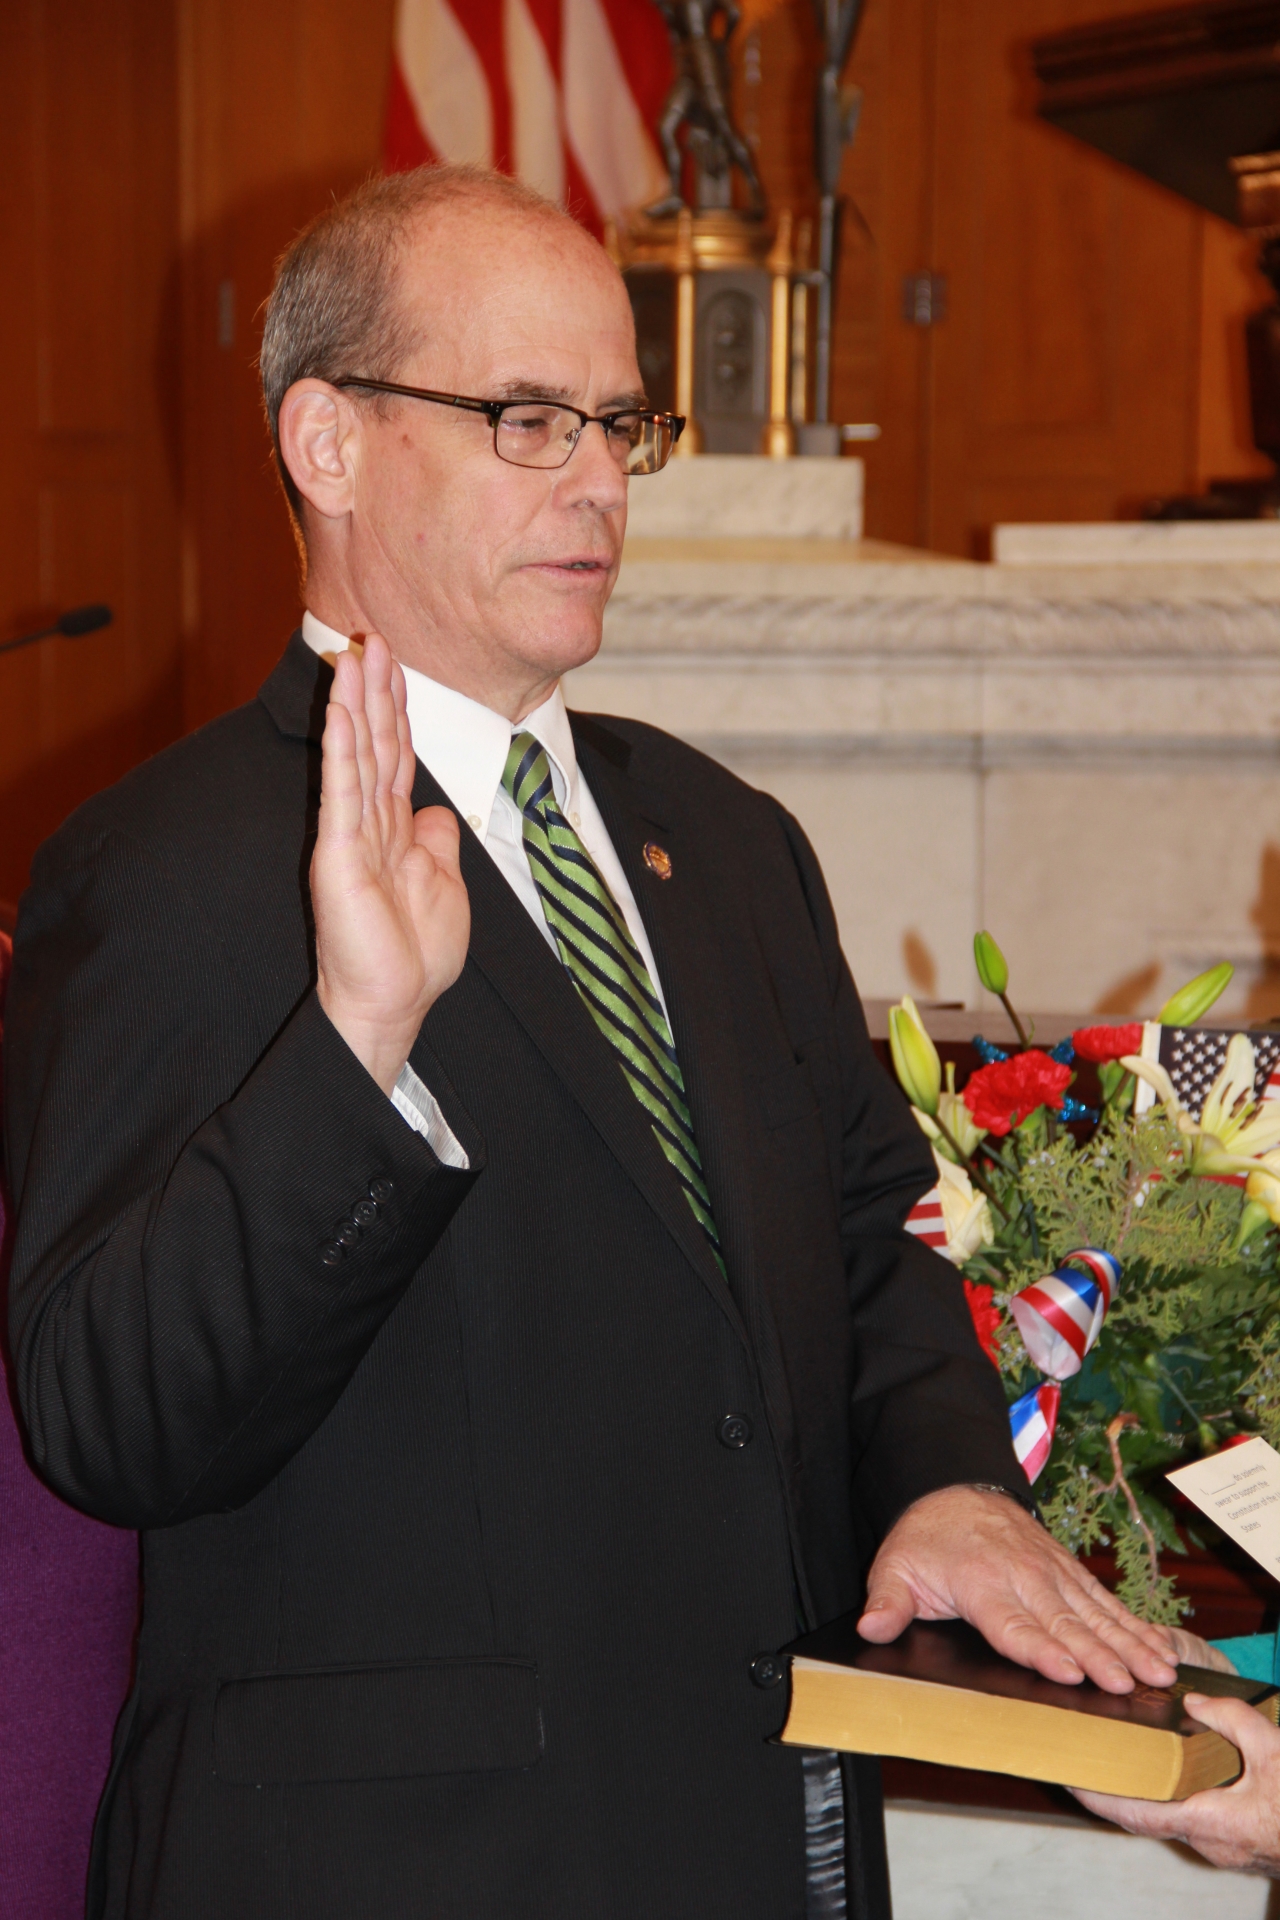 Rep. O'Brien is sworn in as State Representative